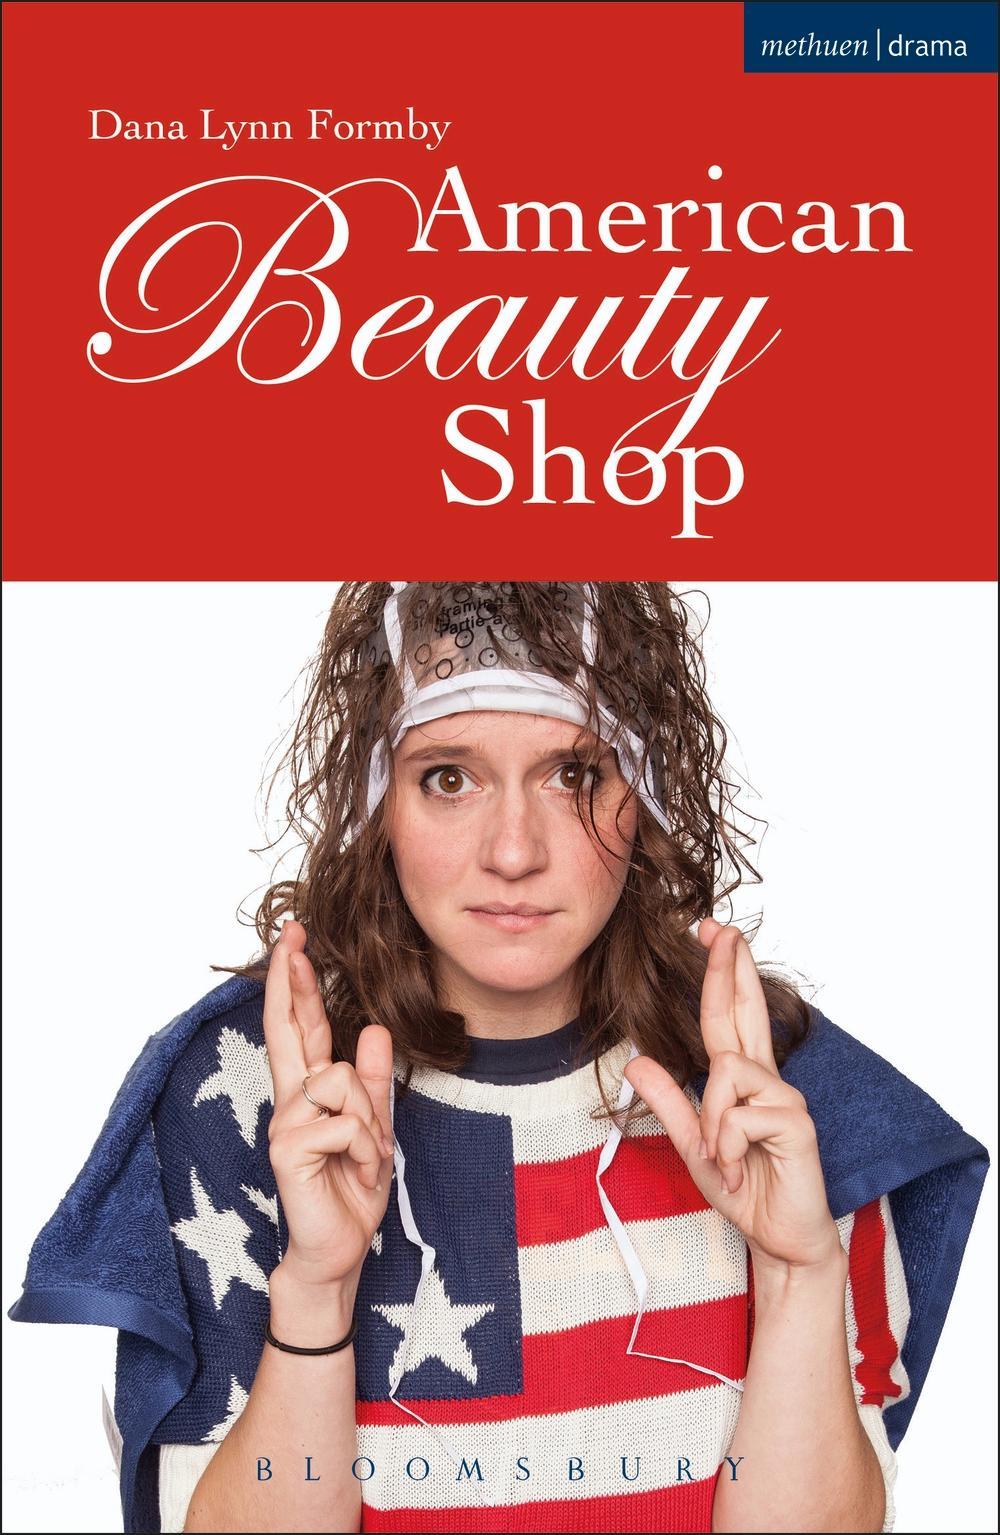 American Beauty Shop - Dana Formby